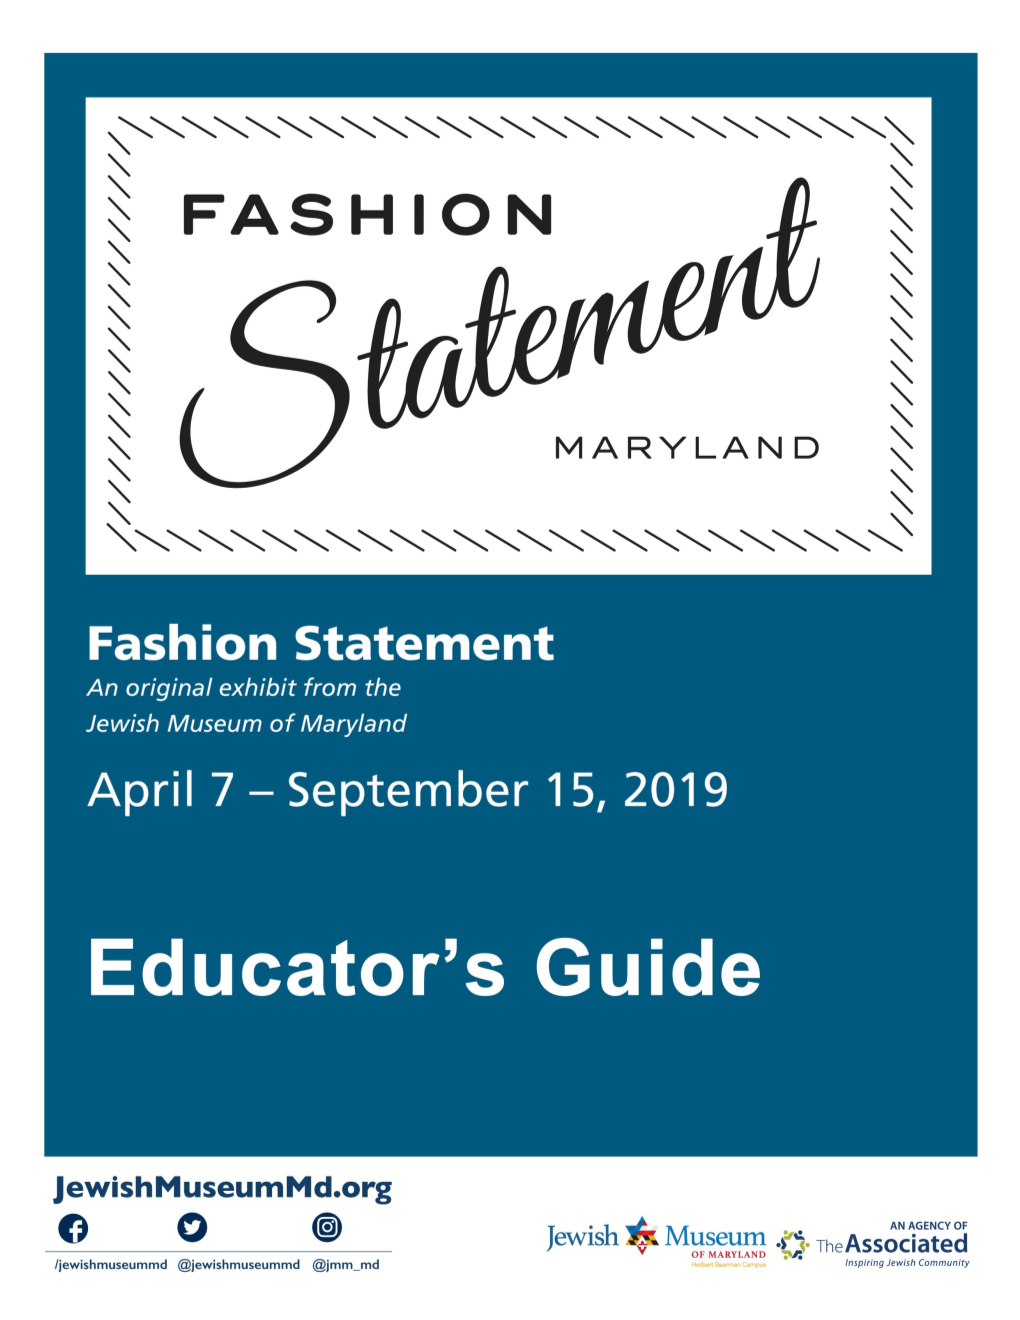 Educator Guide: Fashion Statement